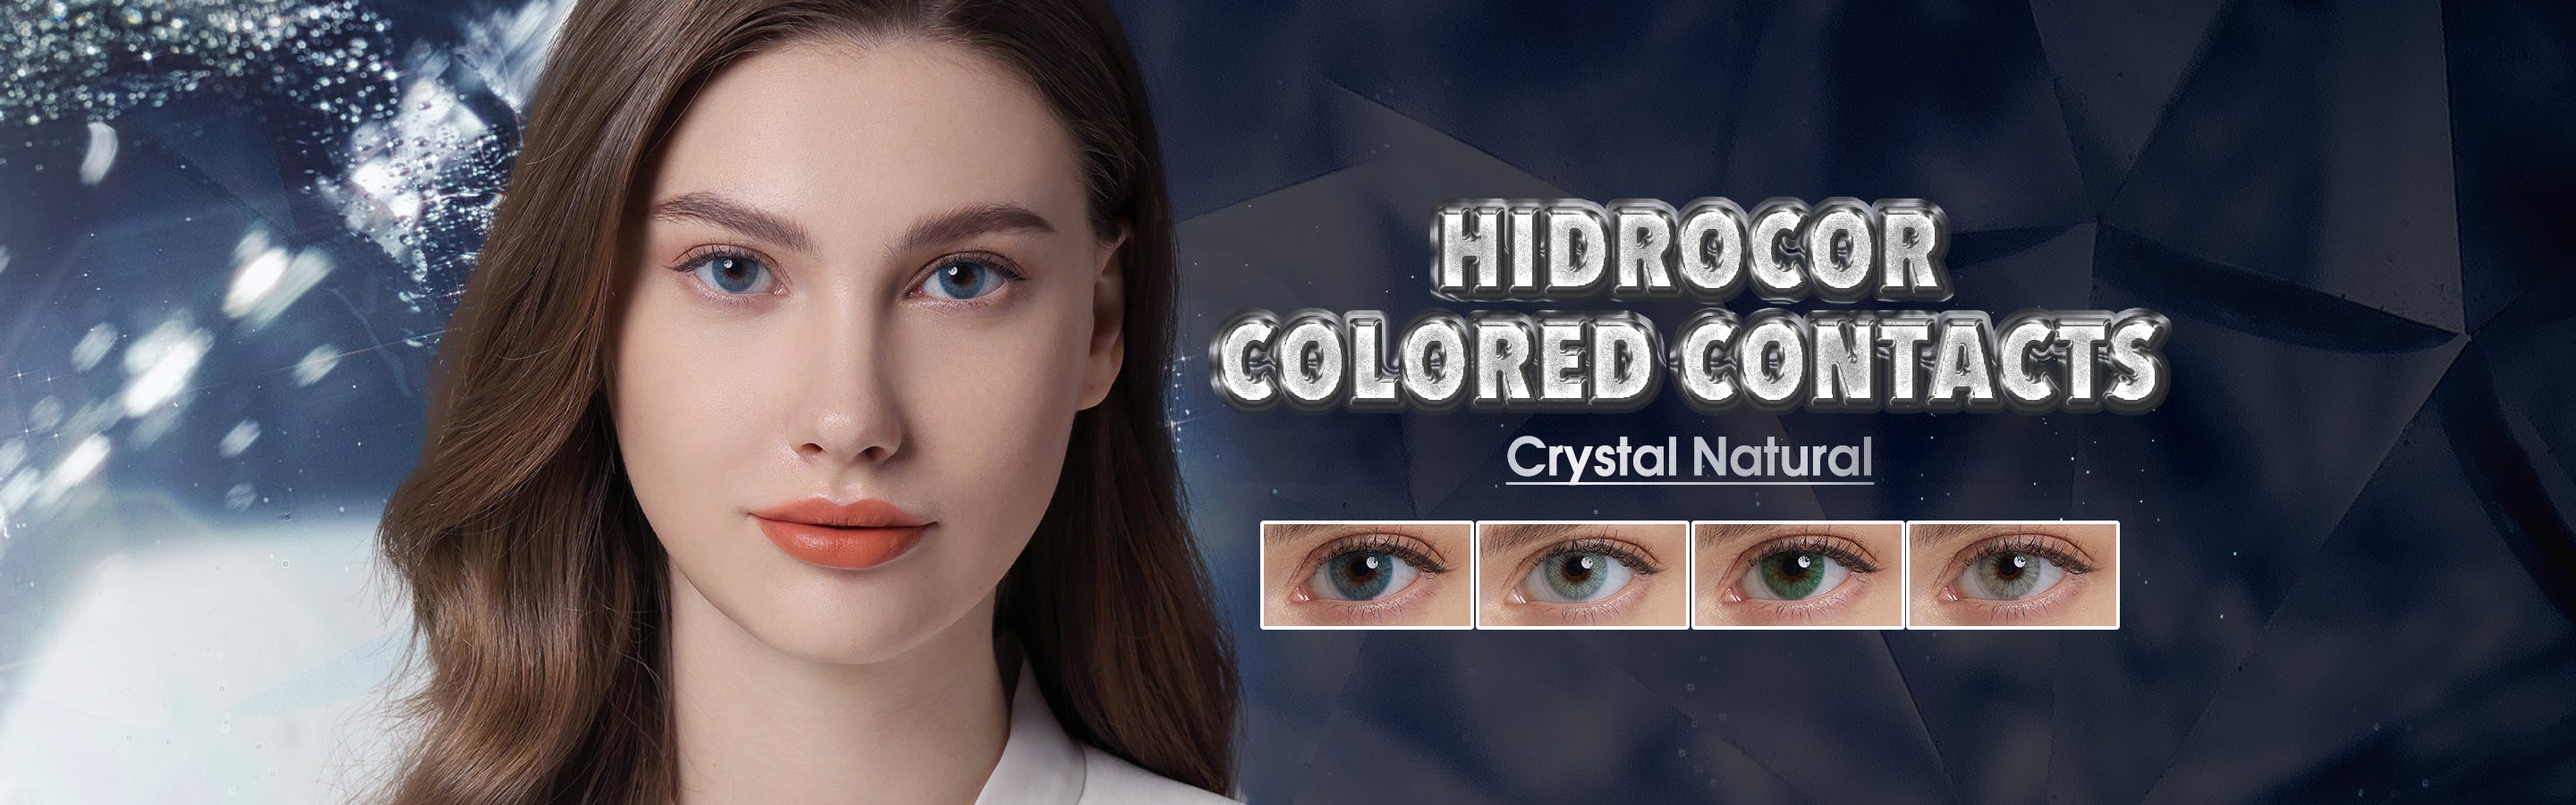 Hidrocore HD MARINE Natural Colored Contact Lenses